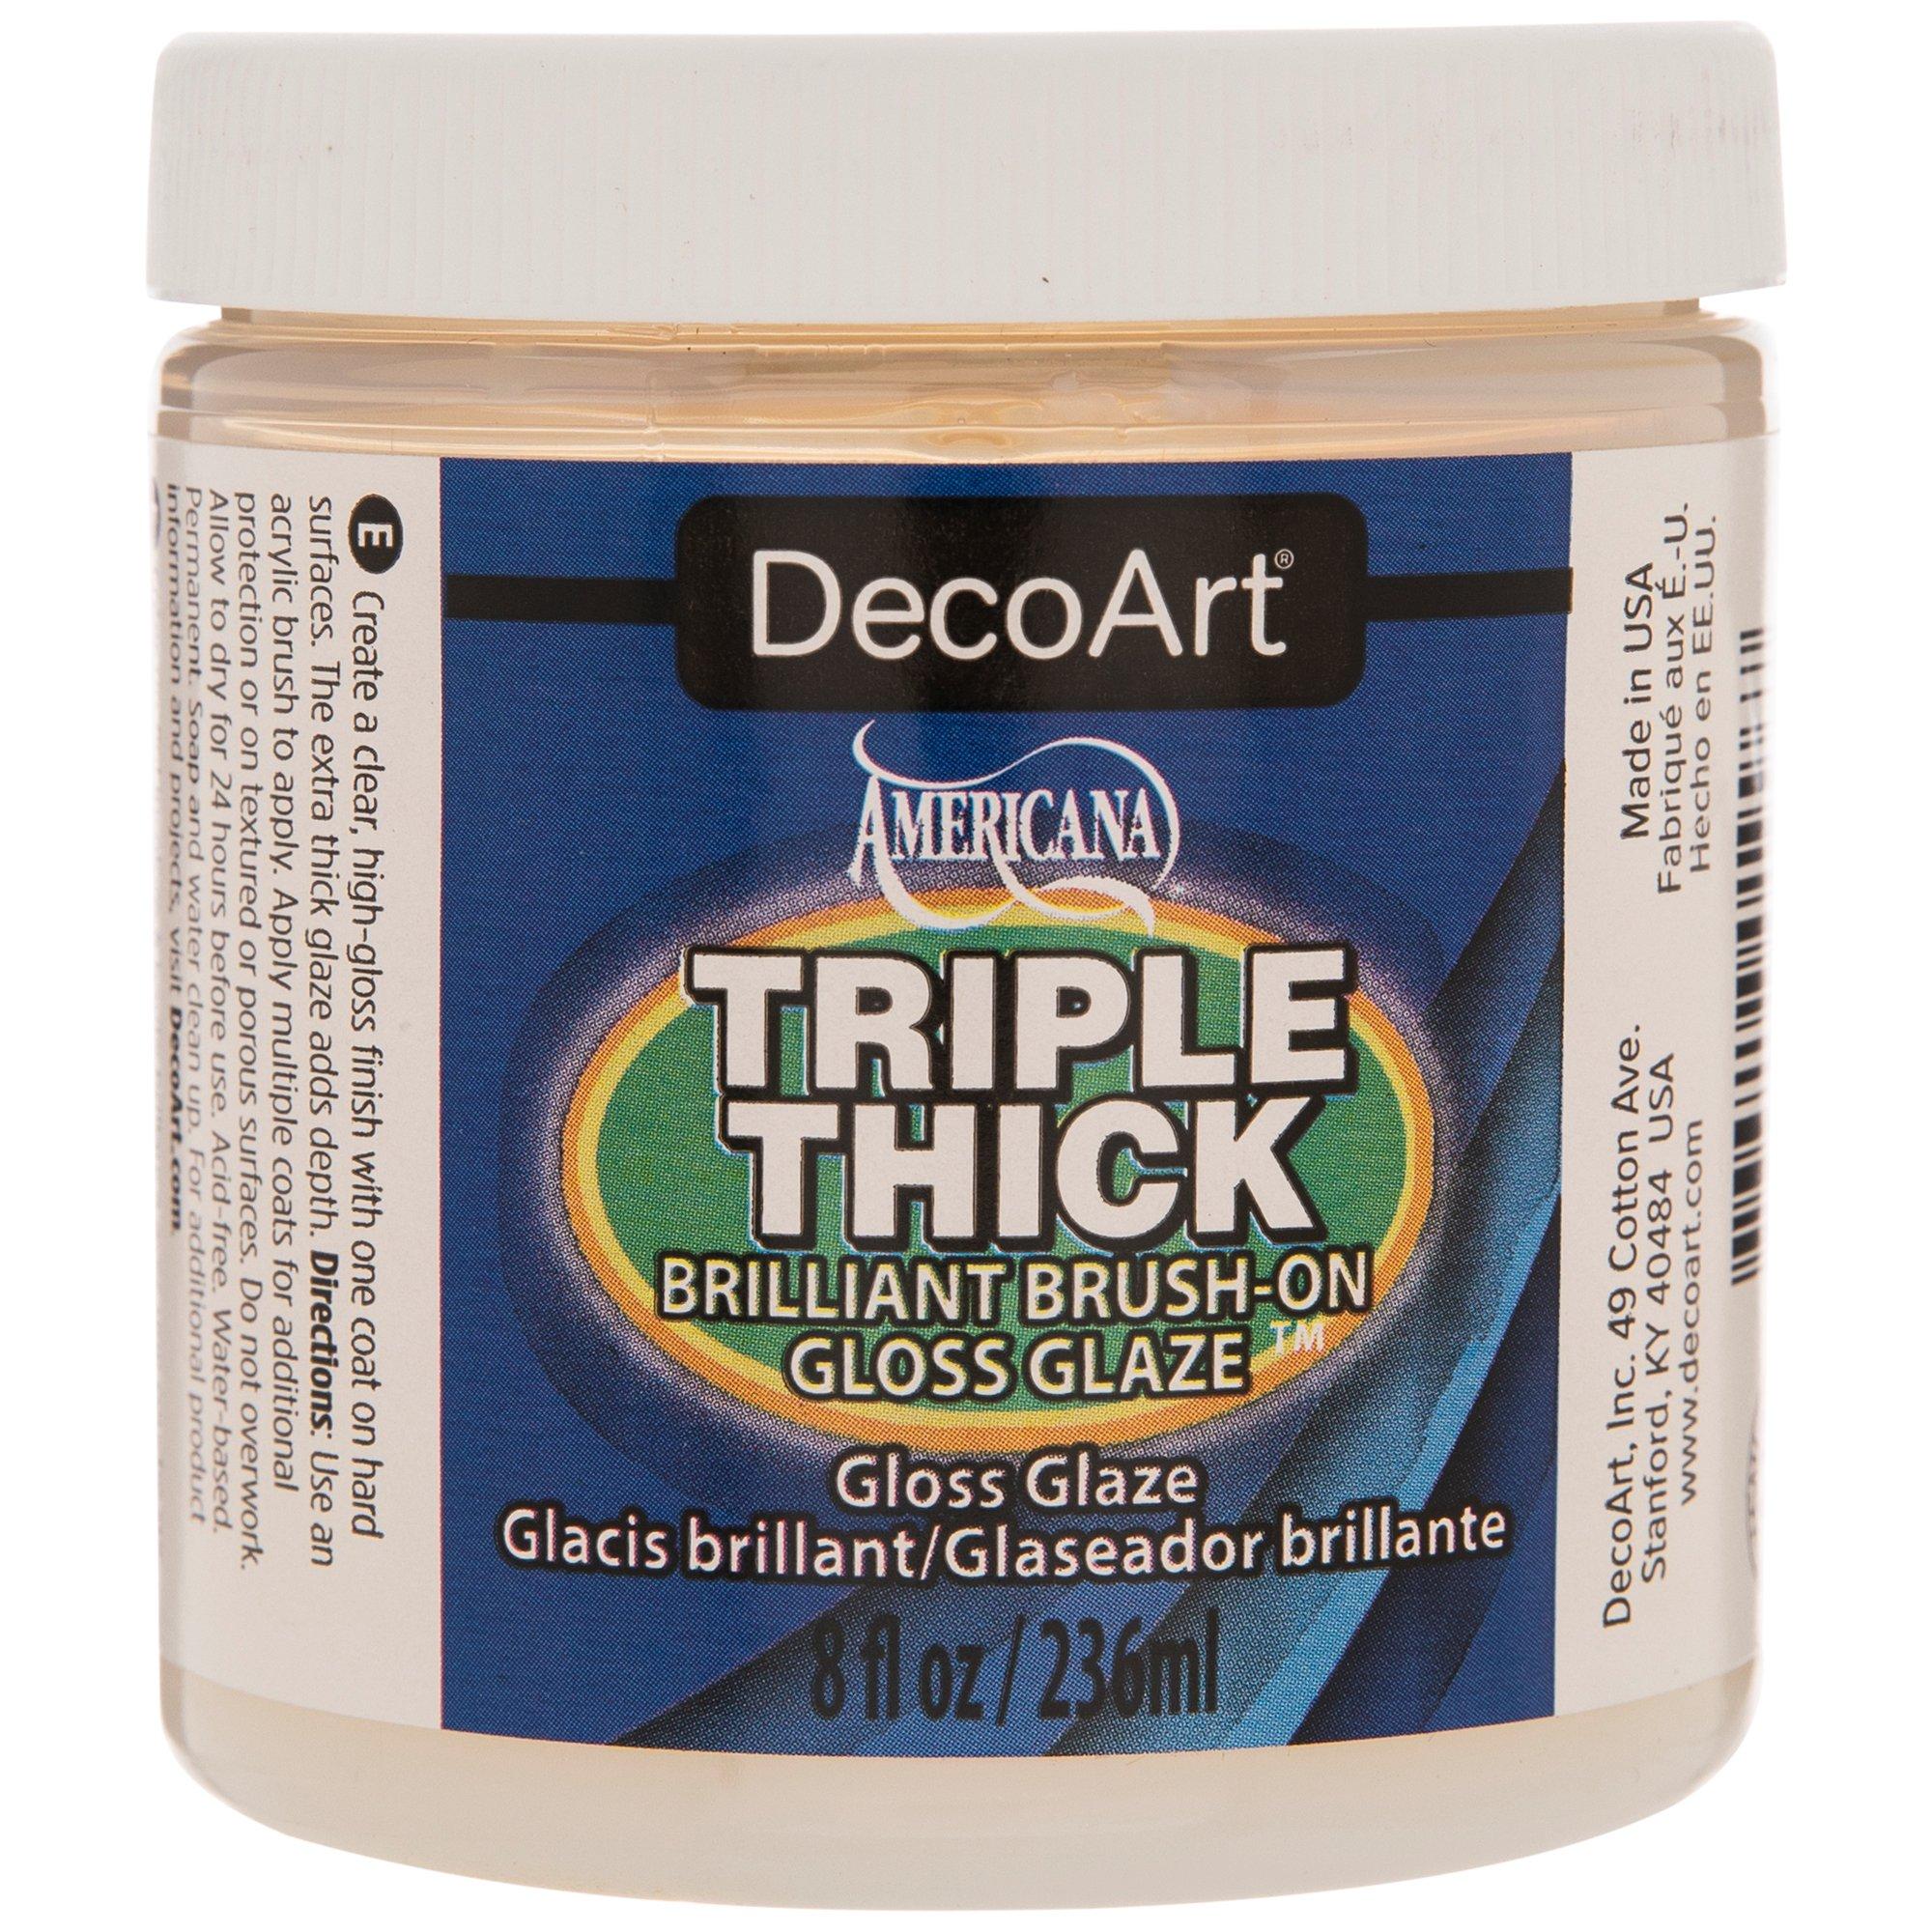  DecoArt Triple Thick Gloss Glaz, 8 fl oz Bottle,White Blue